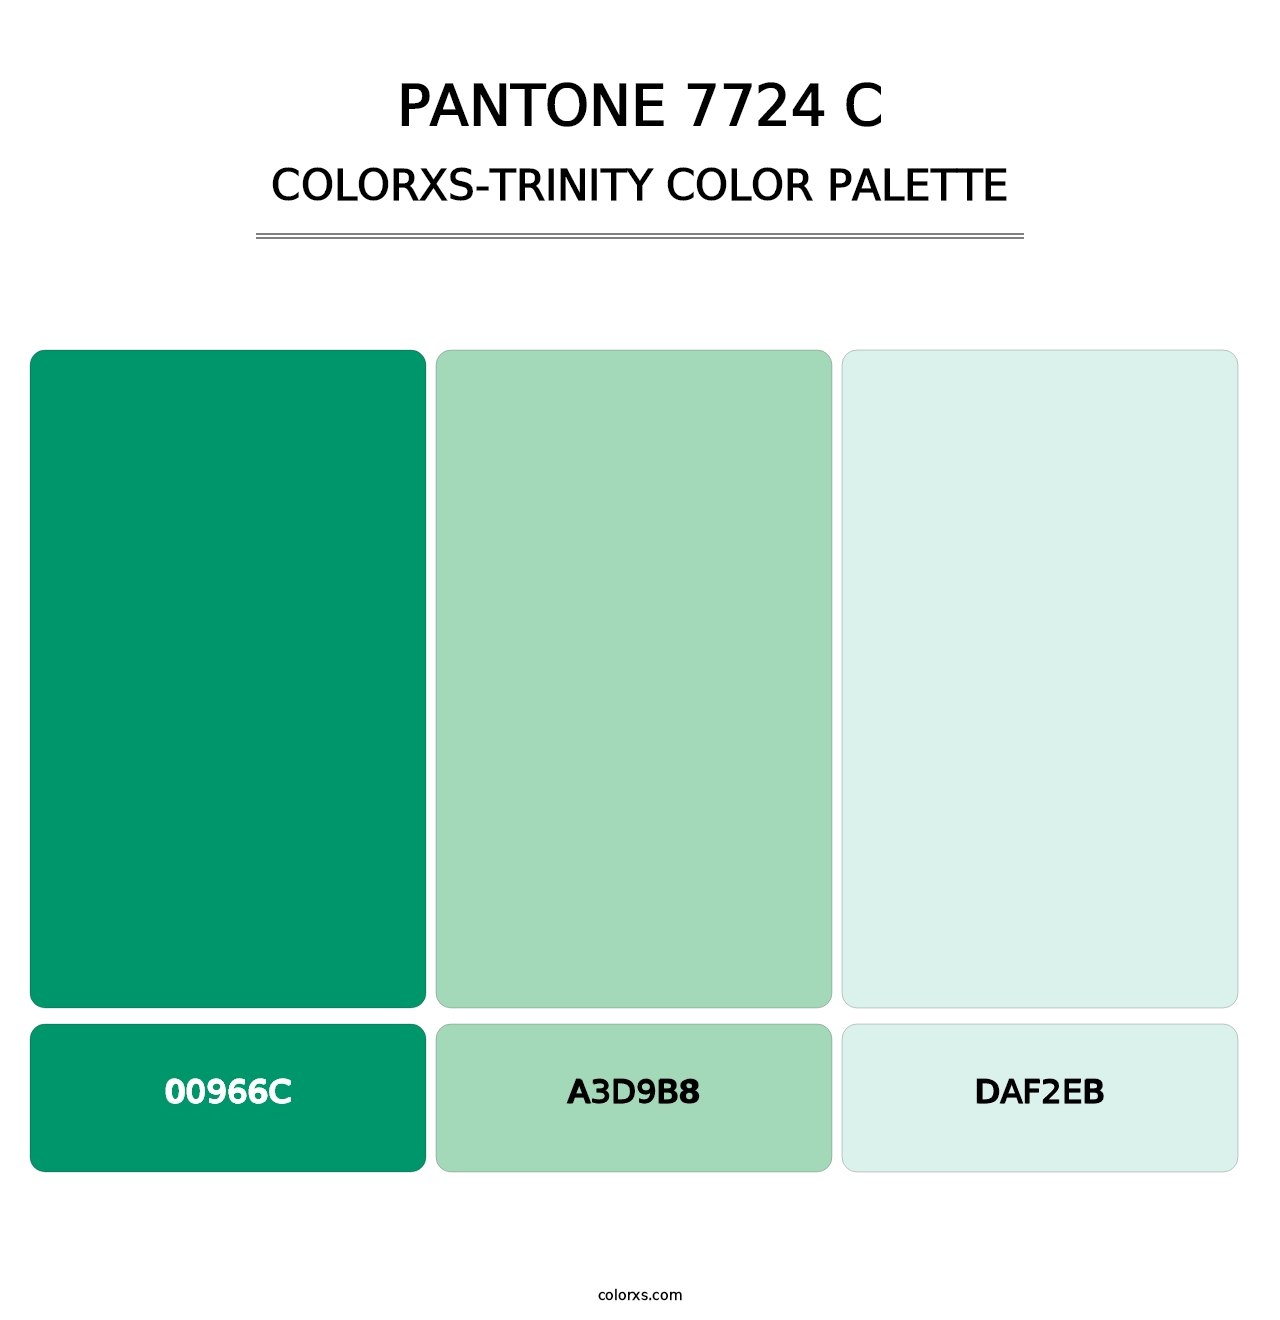 PANTONE 7724 C - Colorxs Trinity Palette